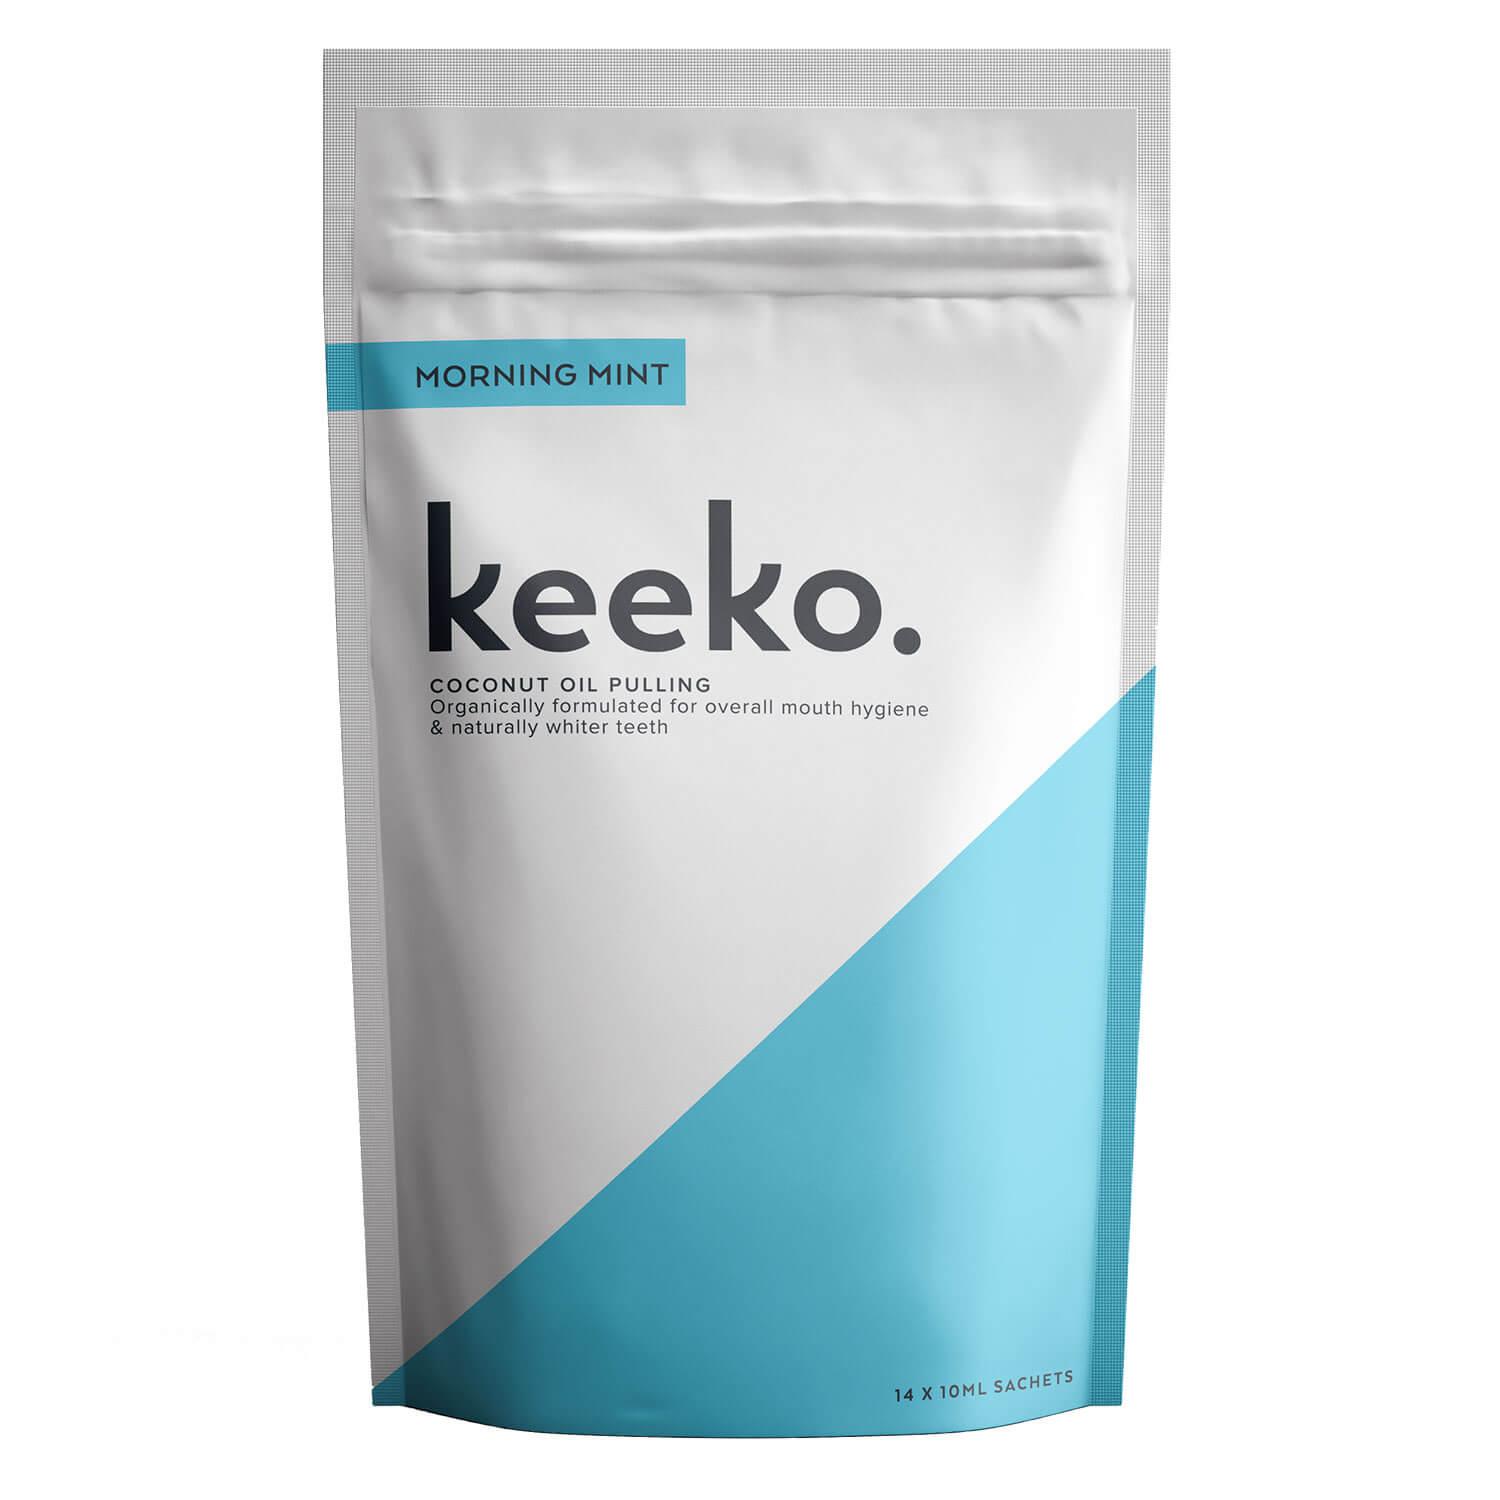 keeko - Morning Mint Oil pulling sachets